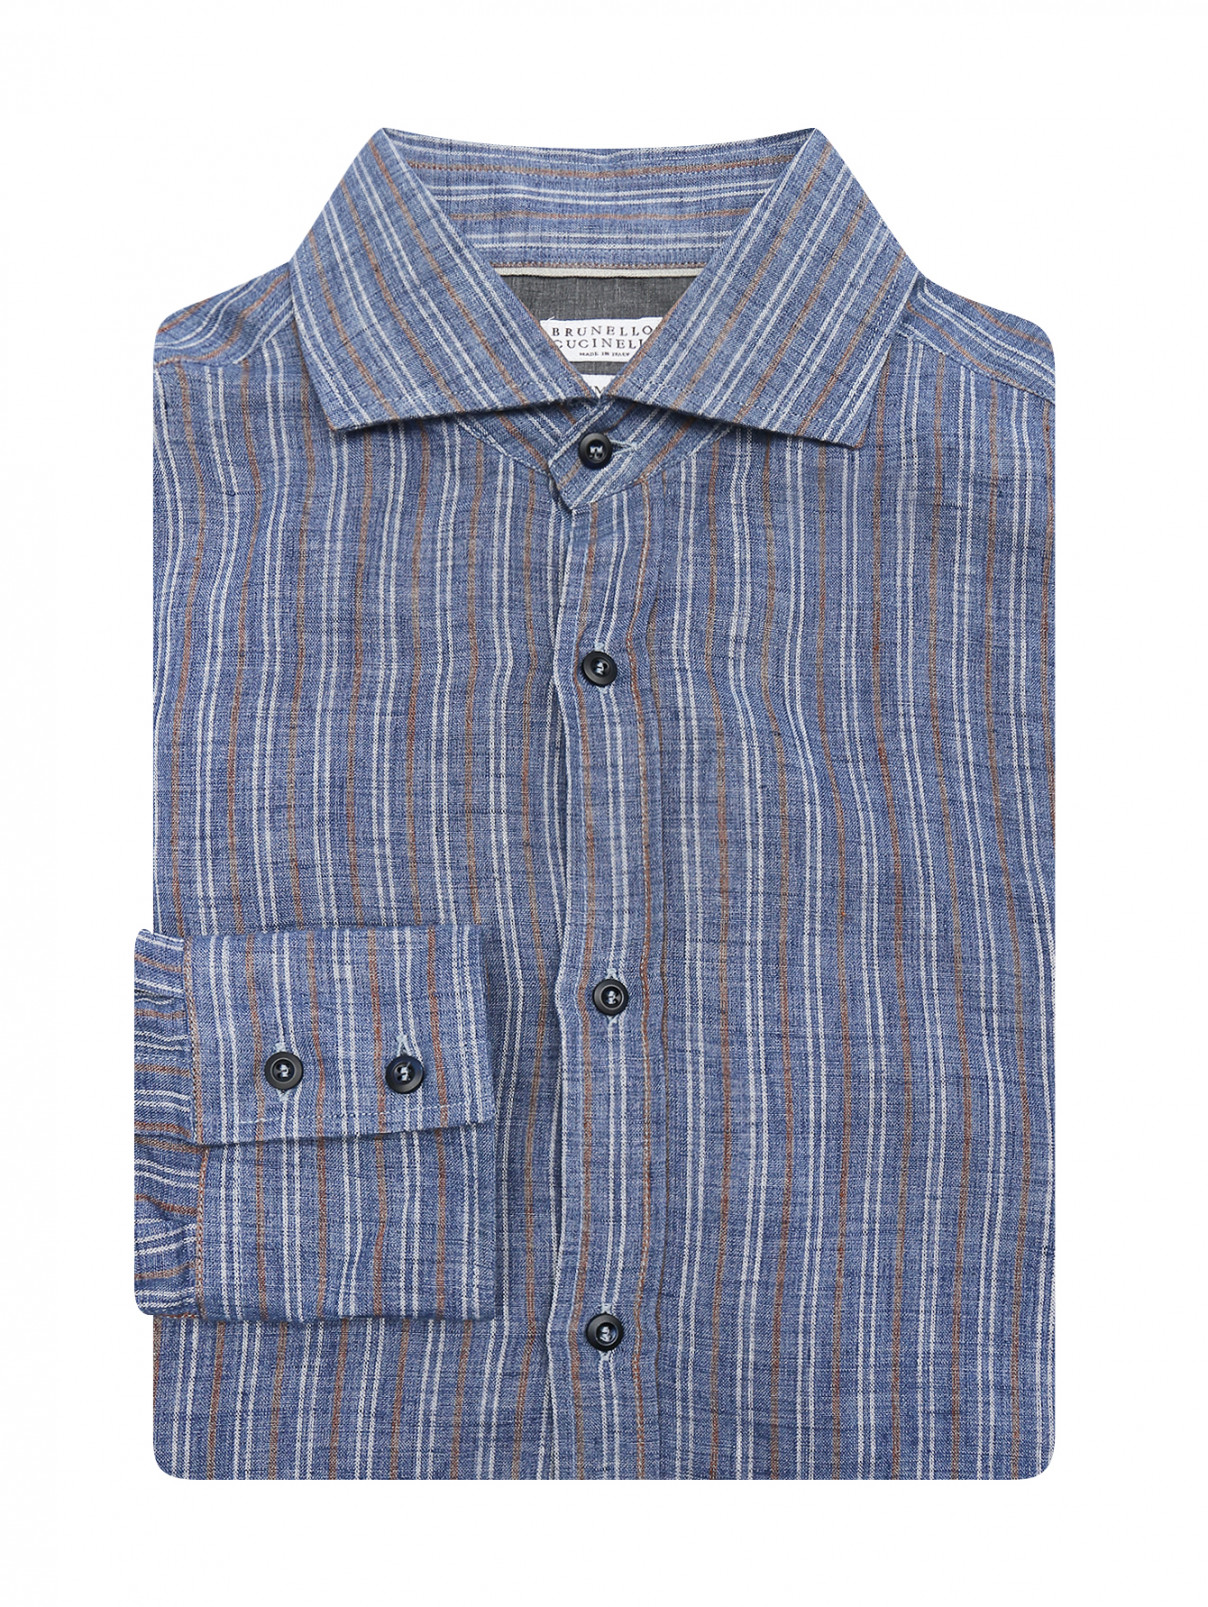 Рубашка изо льна с узором Brunello Cucinelli  –  Общий вид  – Цвет:  Узор